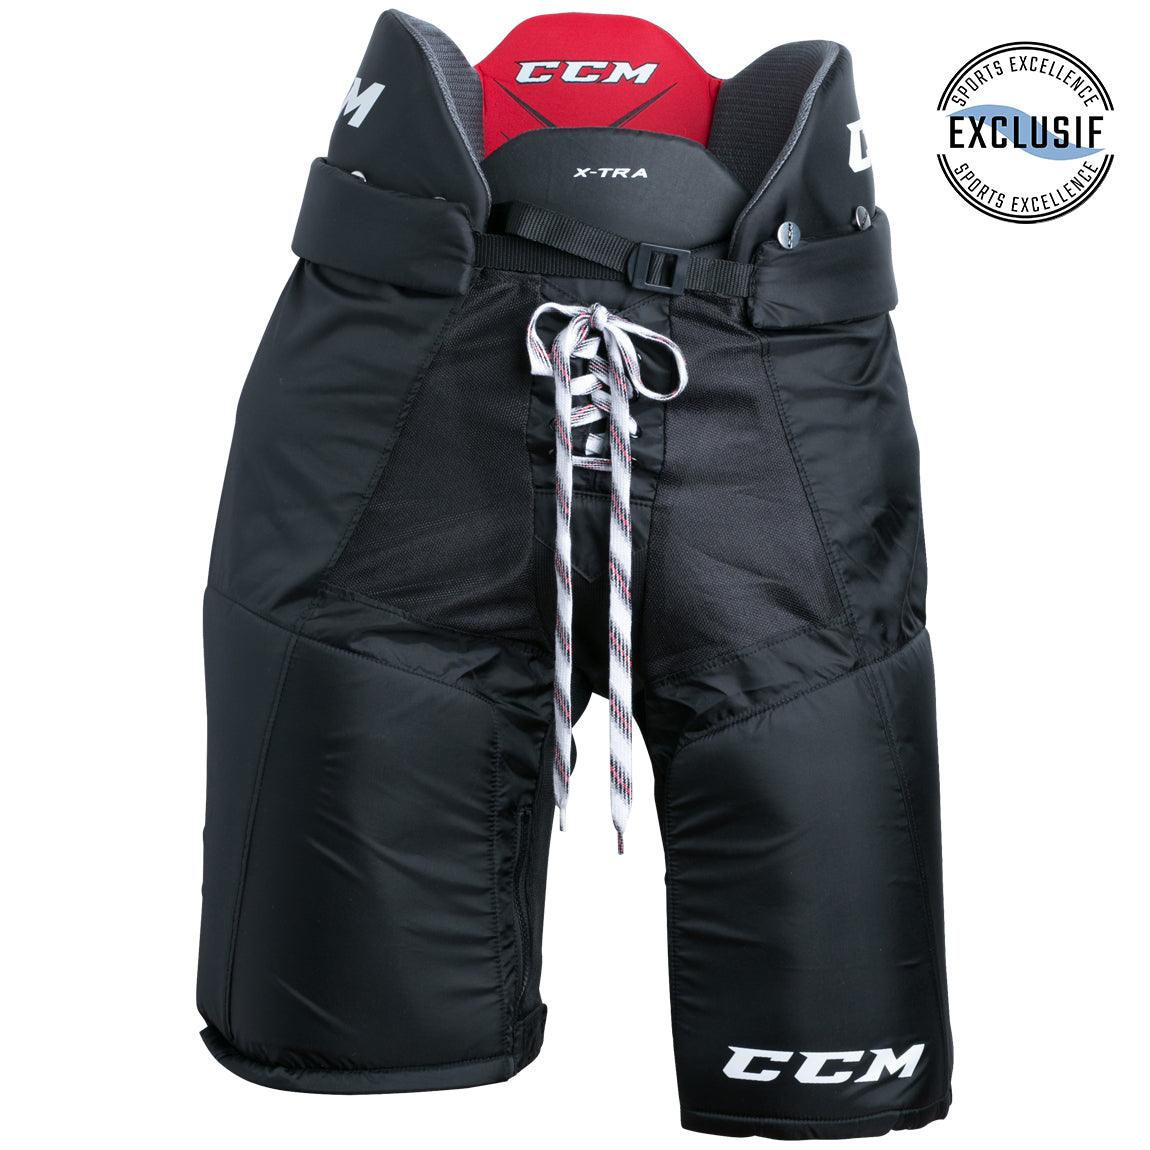 Junior JetSpeed XTRA Hockey Pants by CCM